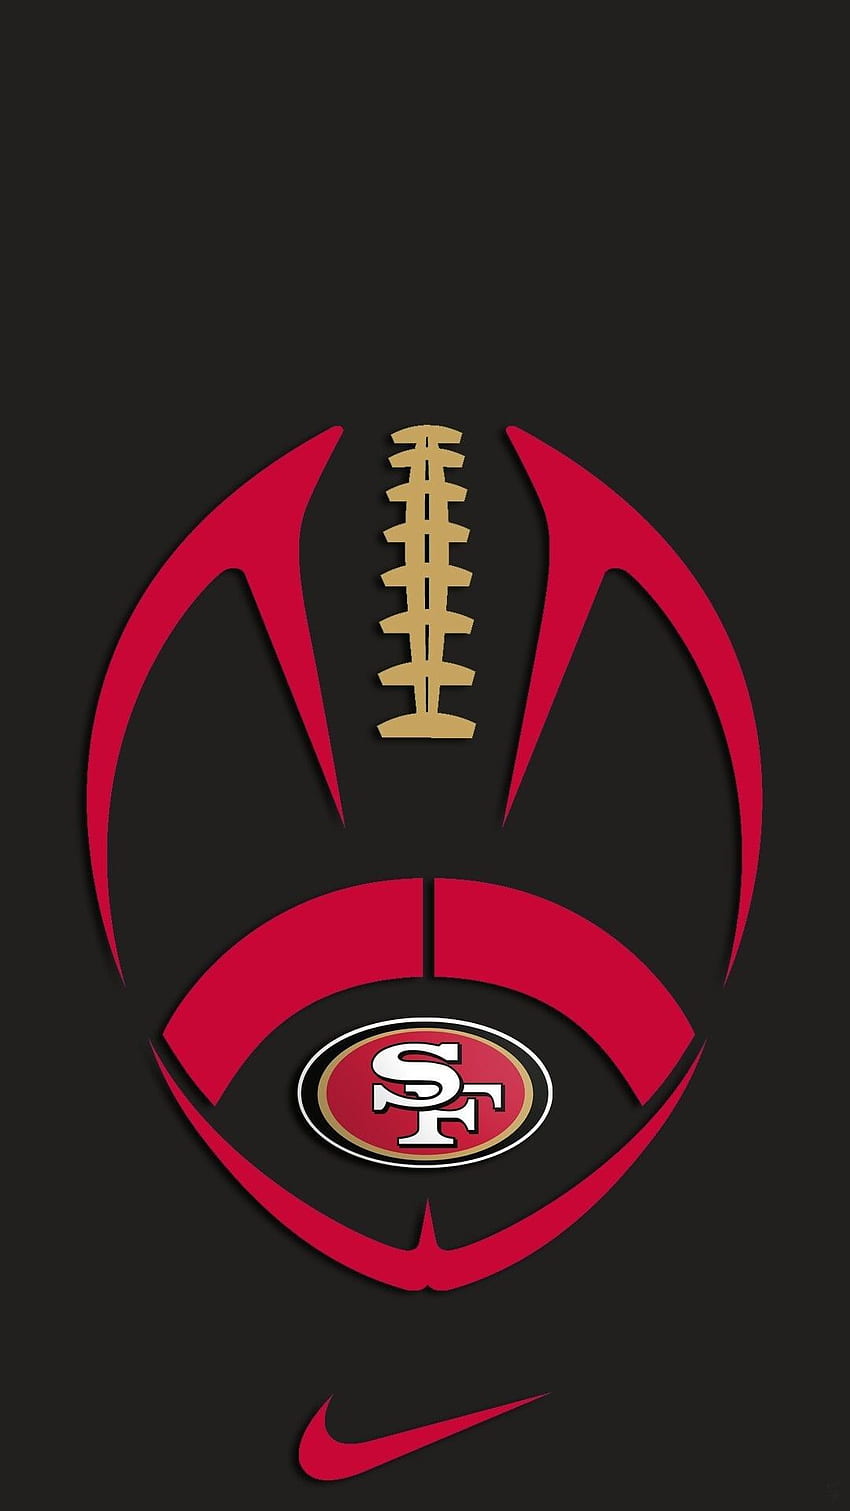 Latar belakang Logo 49Ers, Logo San Francisco 49ers wallpaper ponsel HD